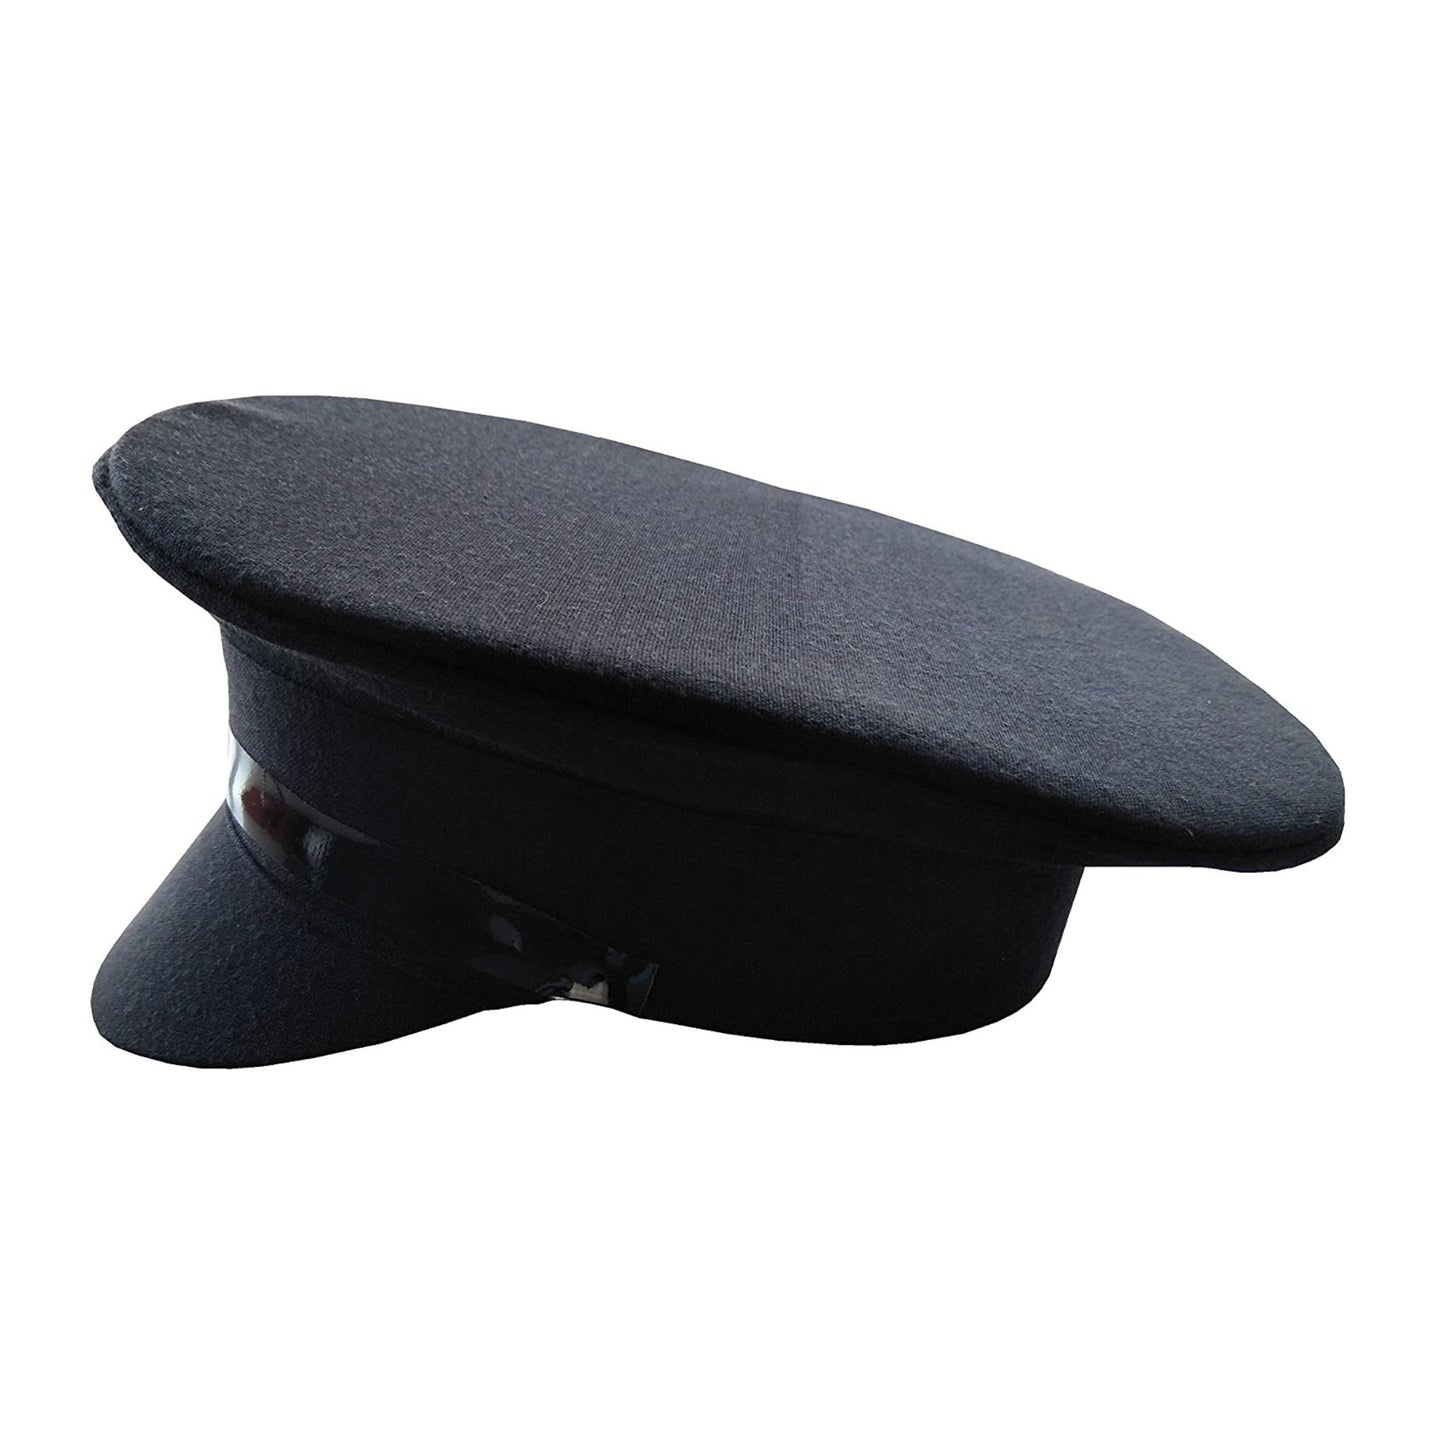 Security Guard Peak Cap (Black, Free Size)